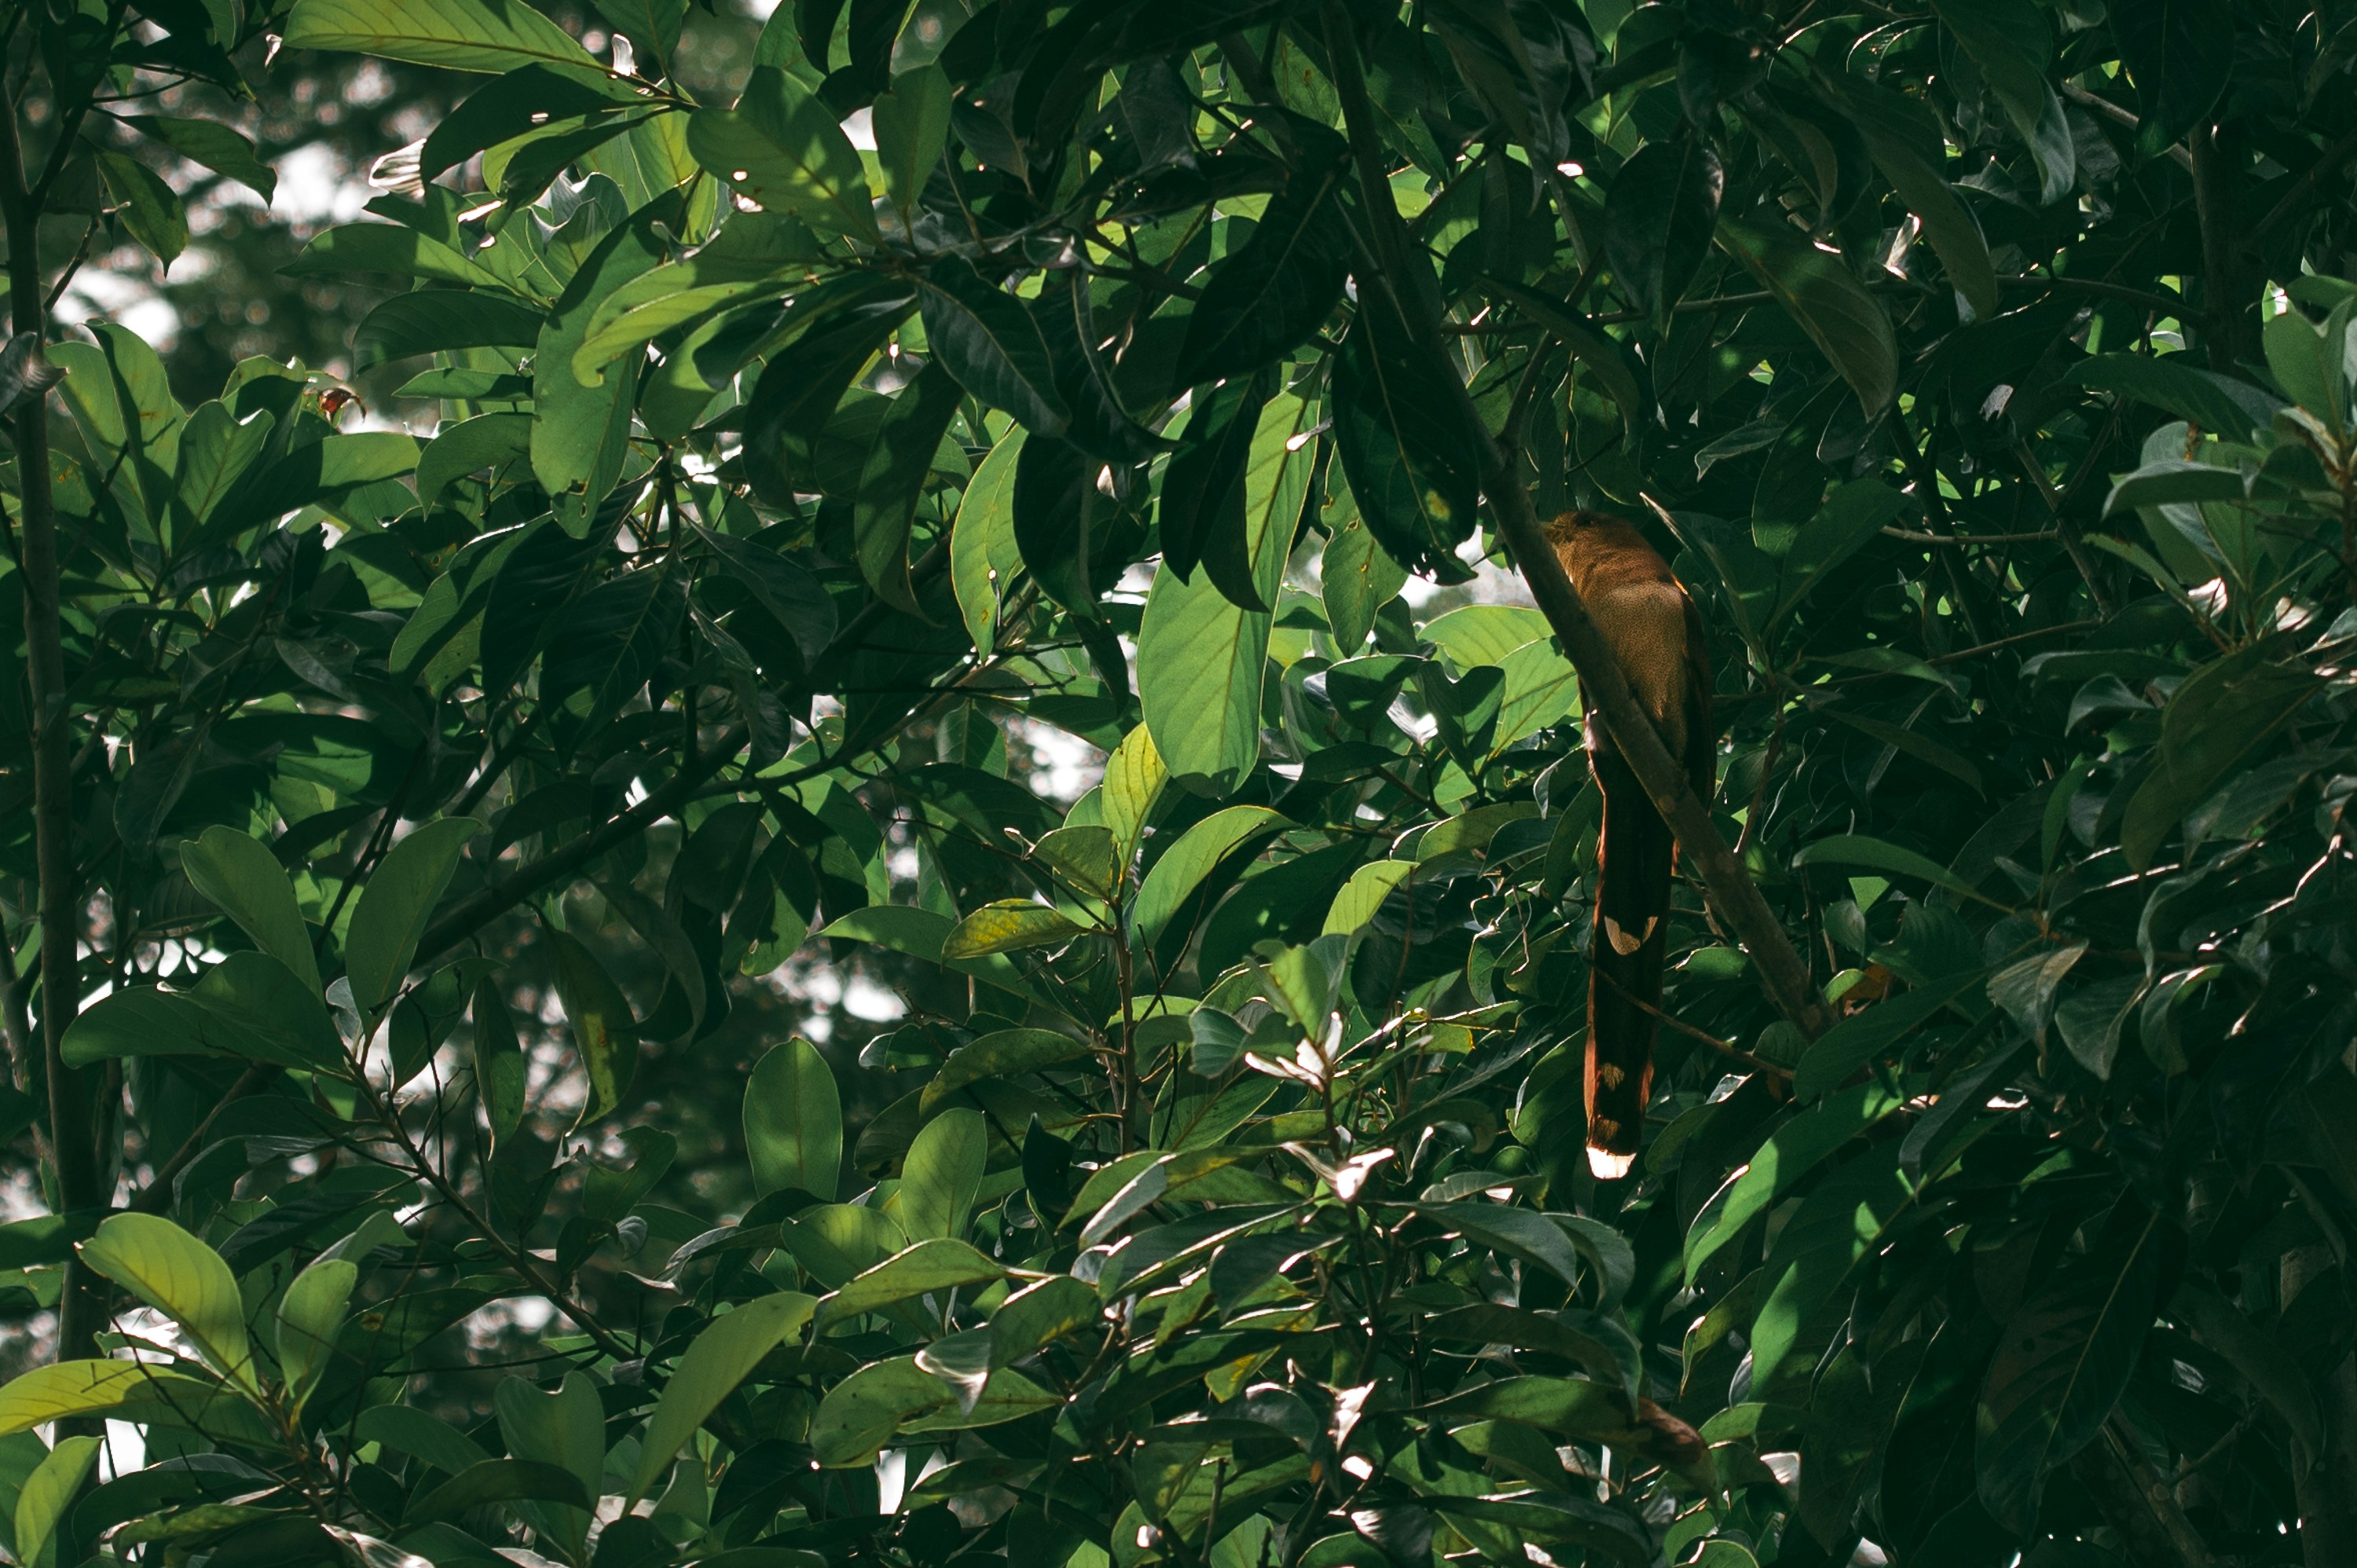 brown bird on green tree during daytime